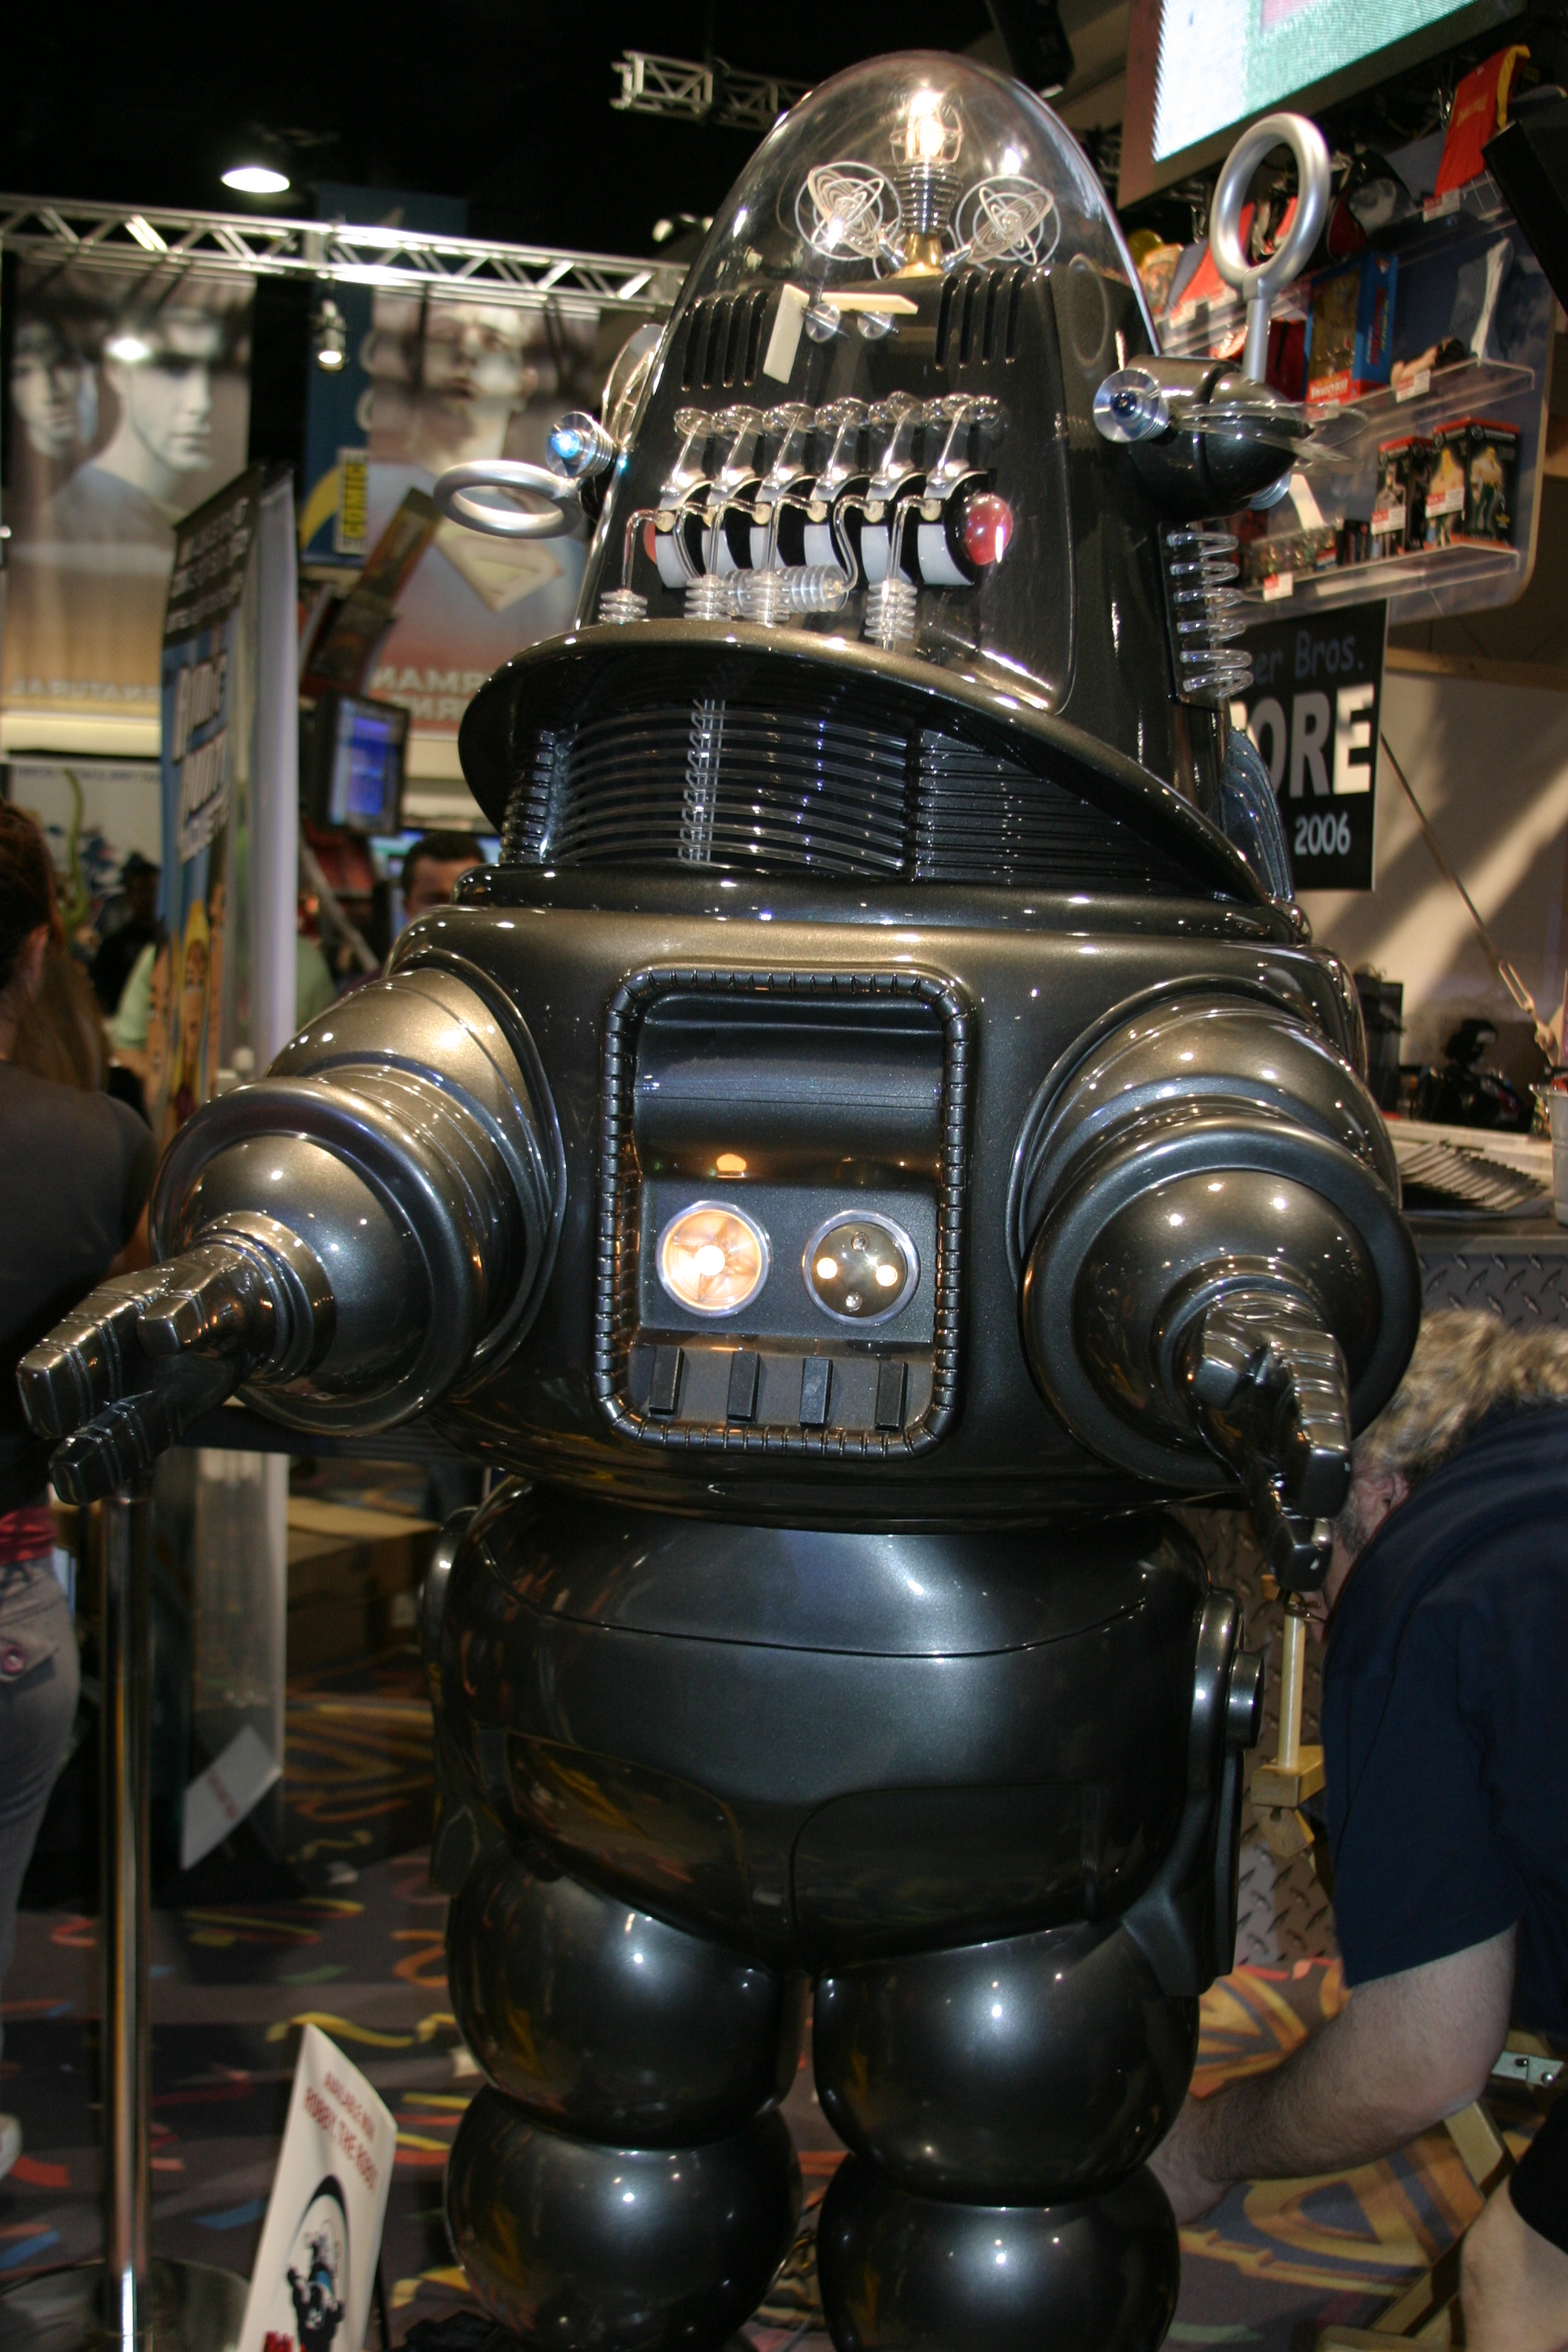 Robbie the Robot San Diego Comic Con 2006